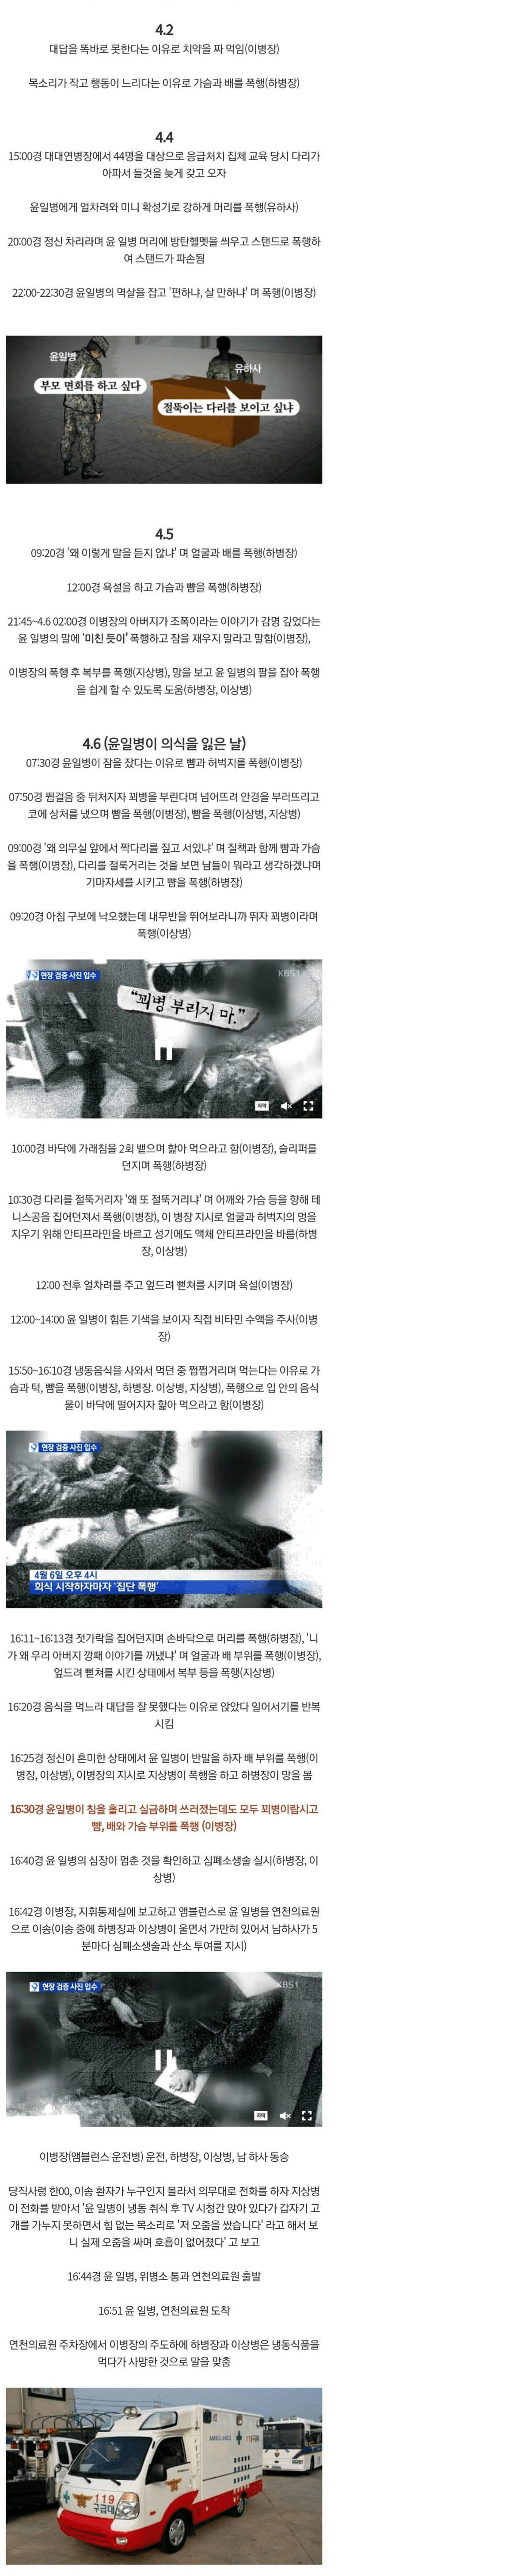 nokbeon.net-10년전 발생한 최악의 군대 살인사건-3번 이미지